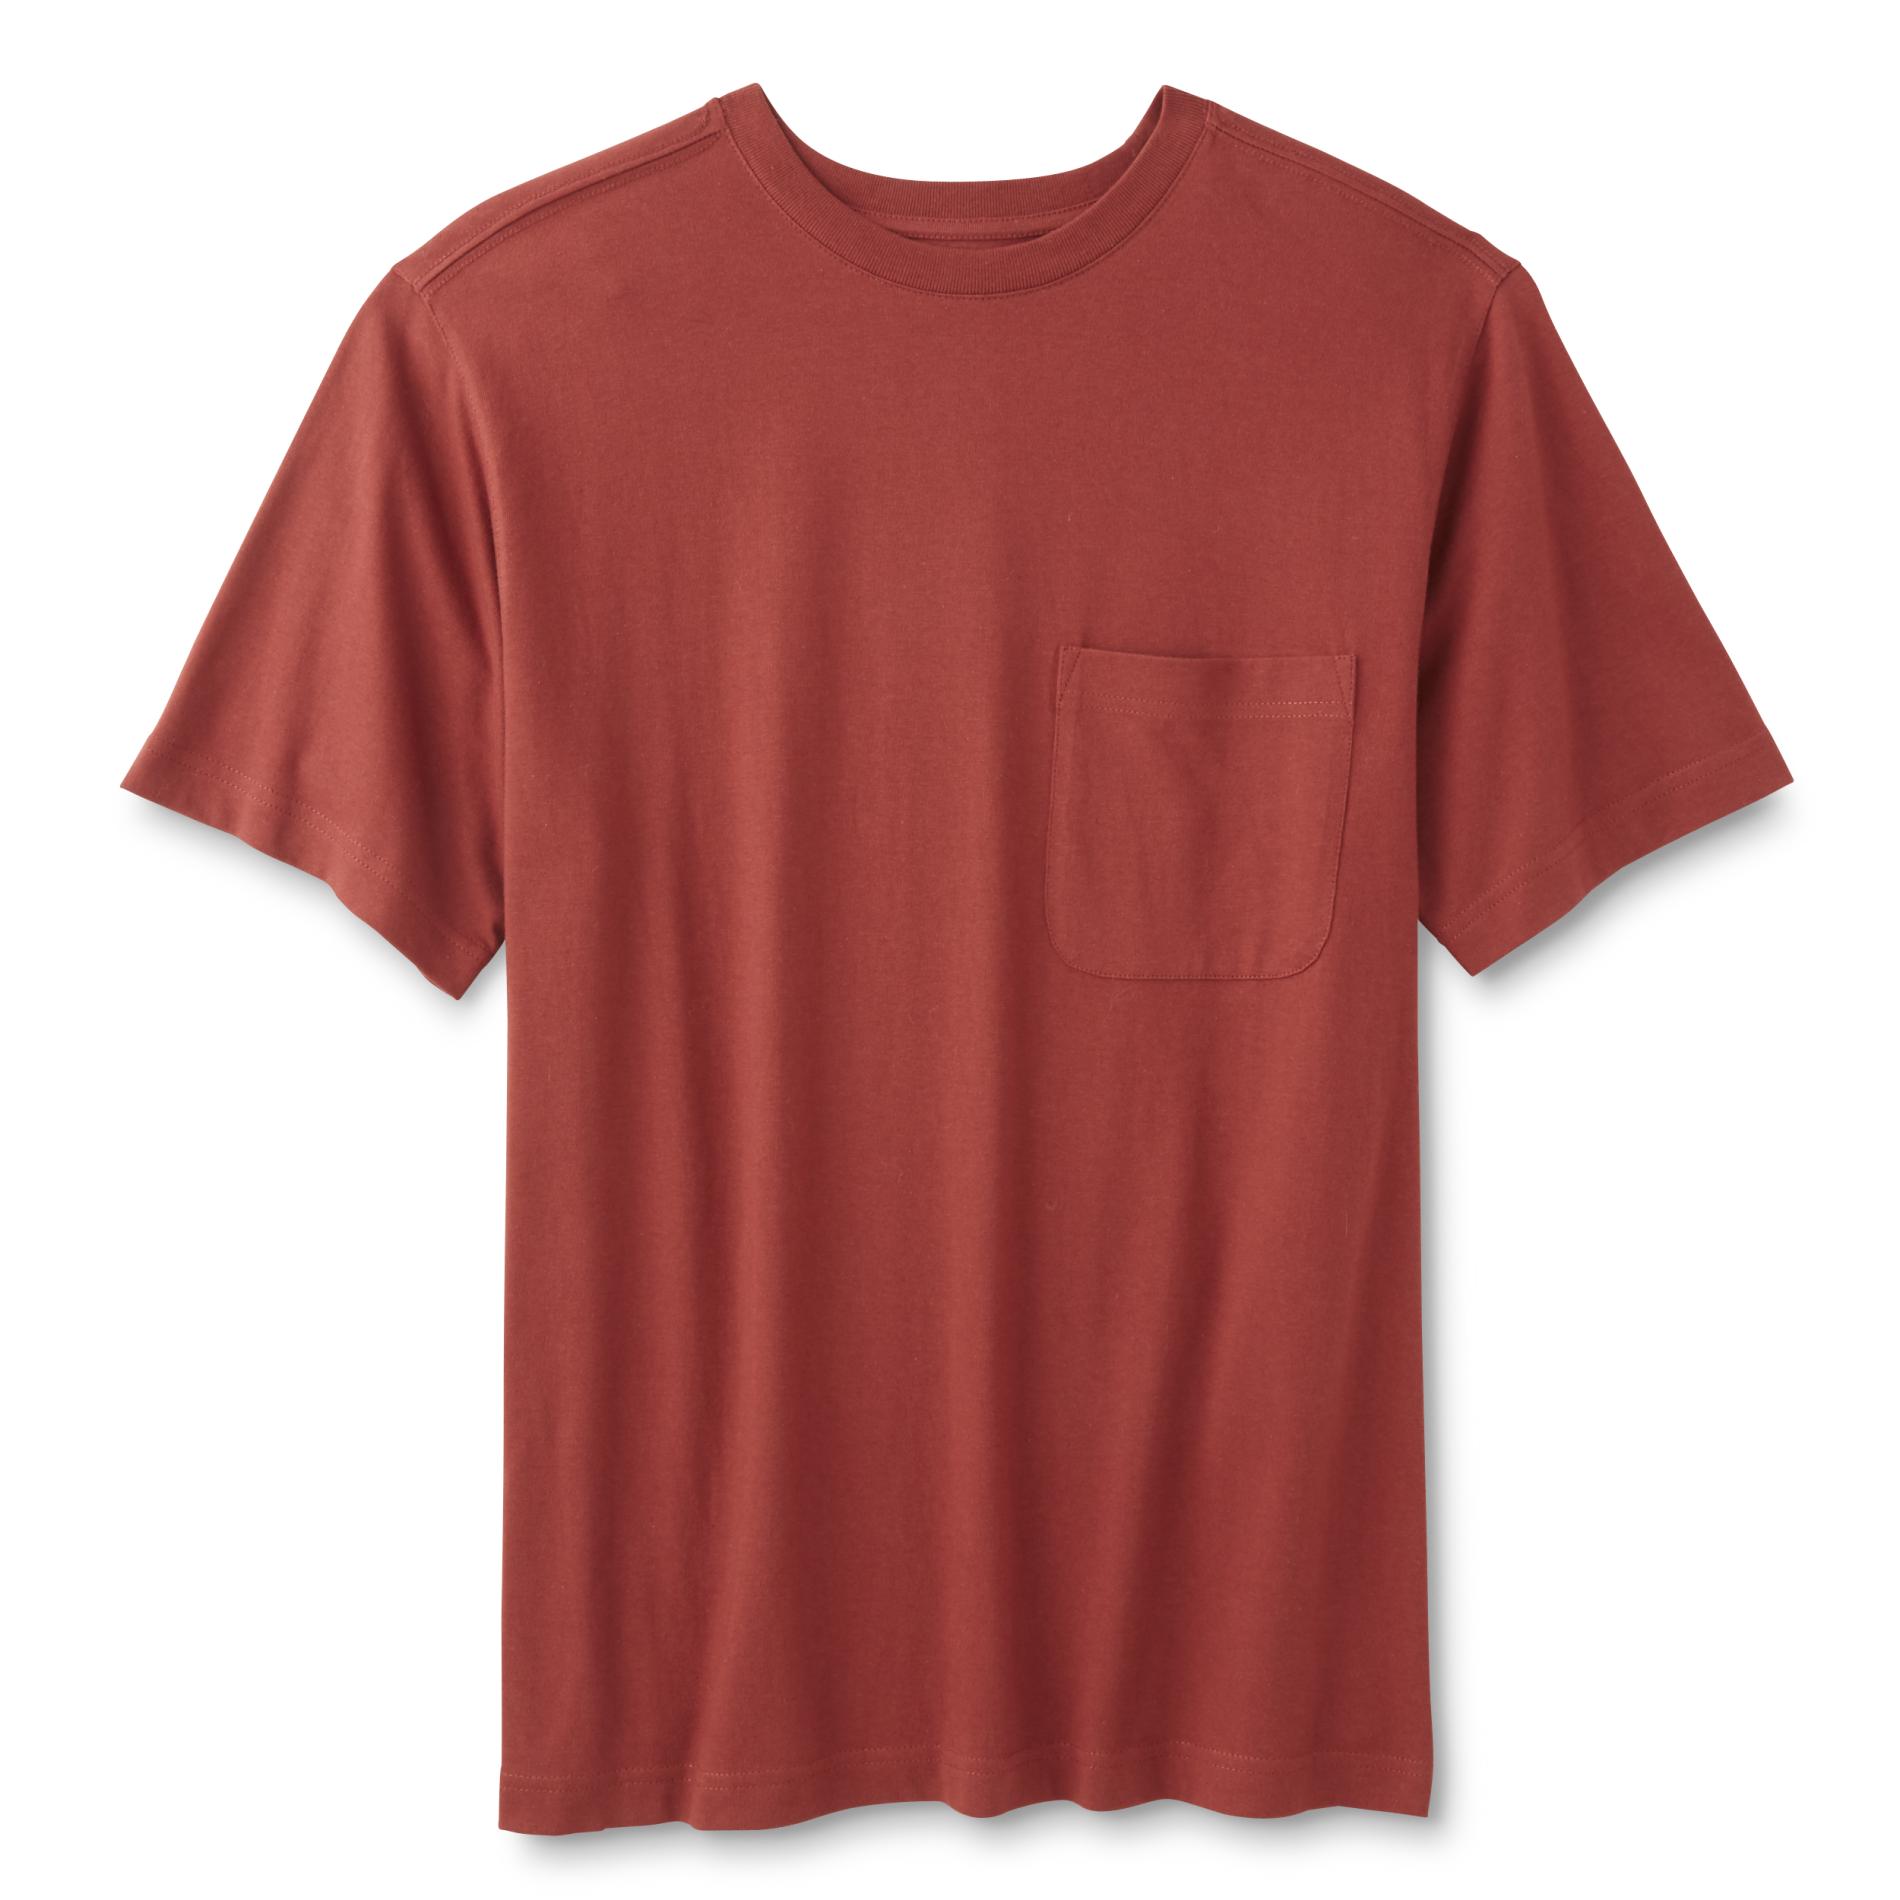 Outdoor Life&reg; Men's Pocket T-Shirt